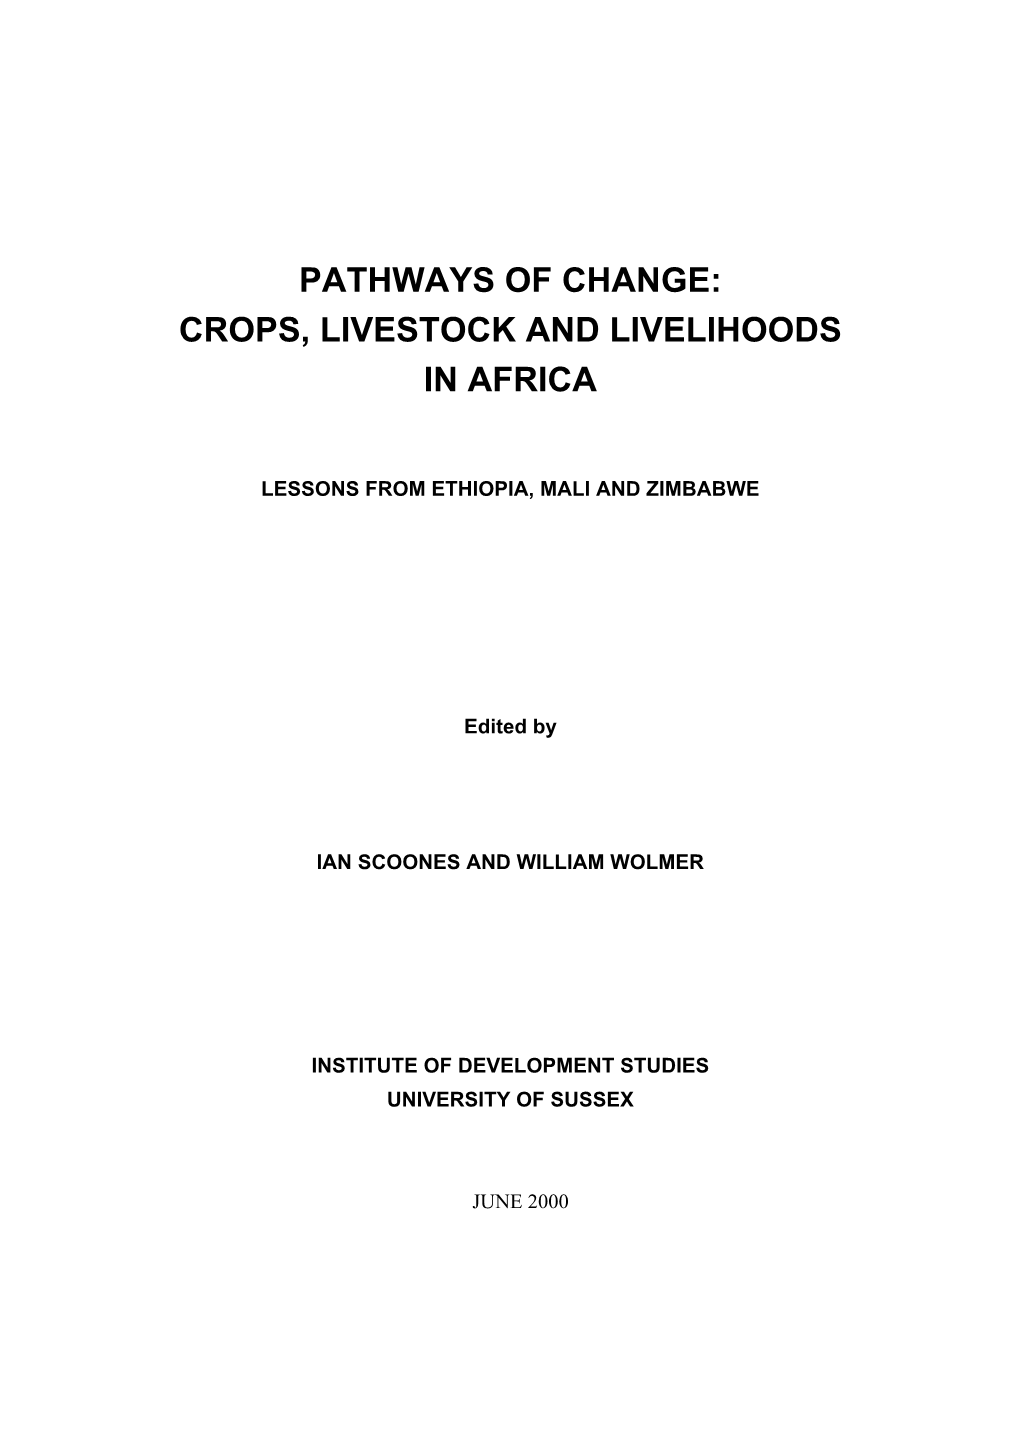 Crop-Livestock Integration in Mali: Multiple Pathways of Change